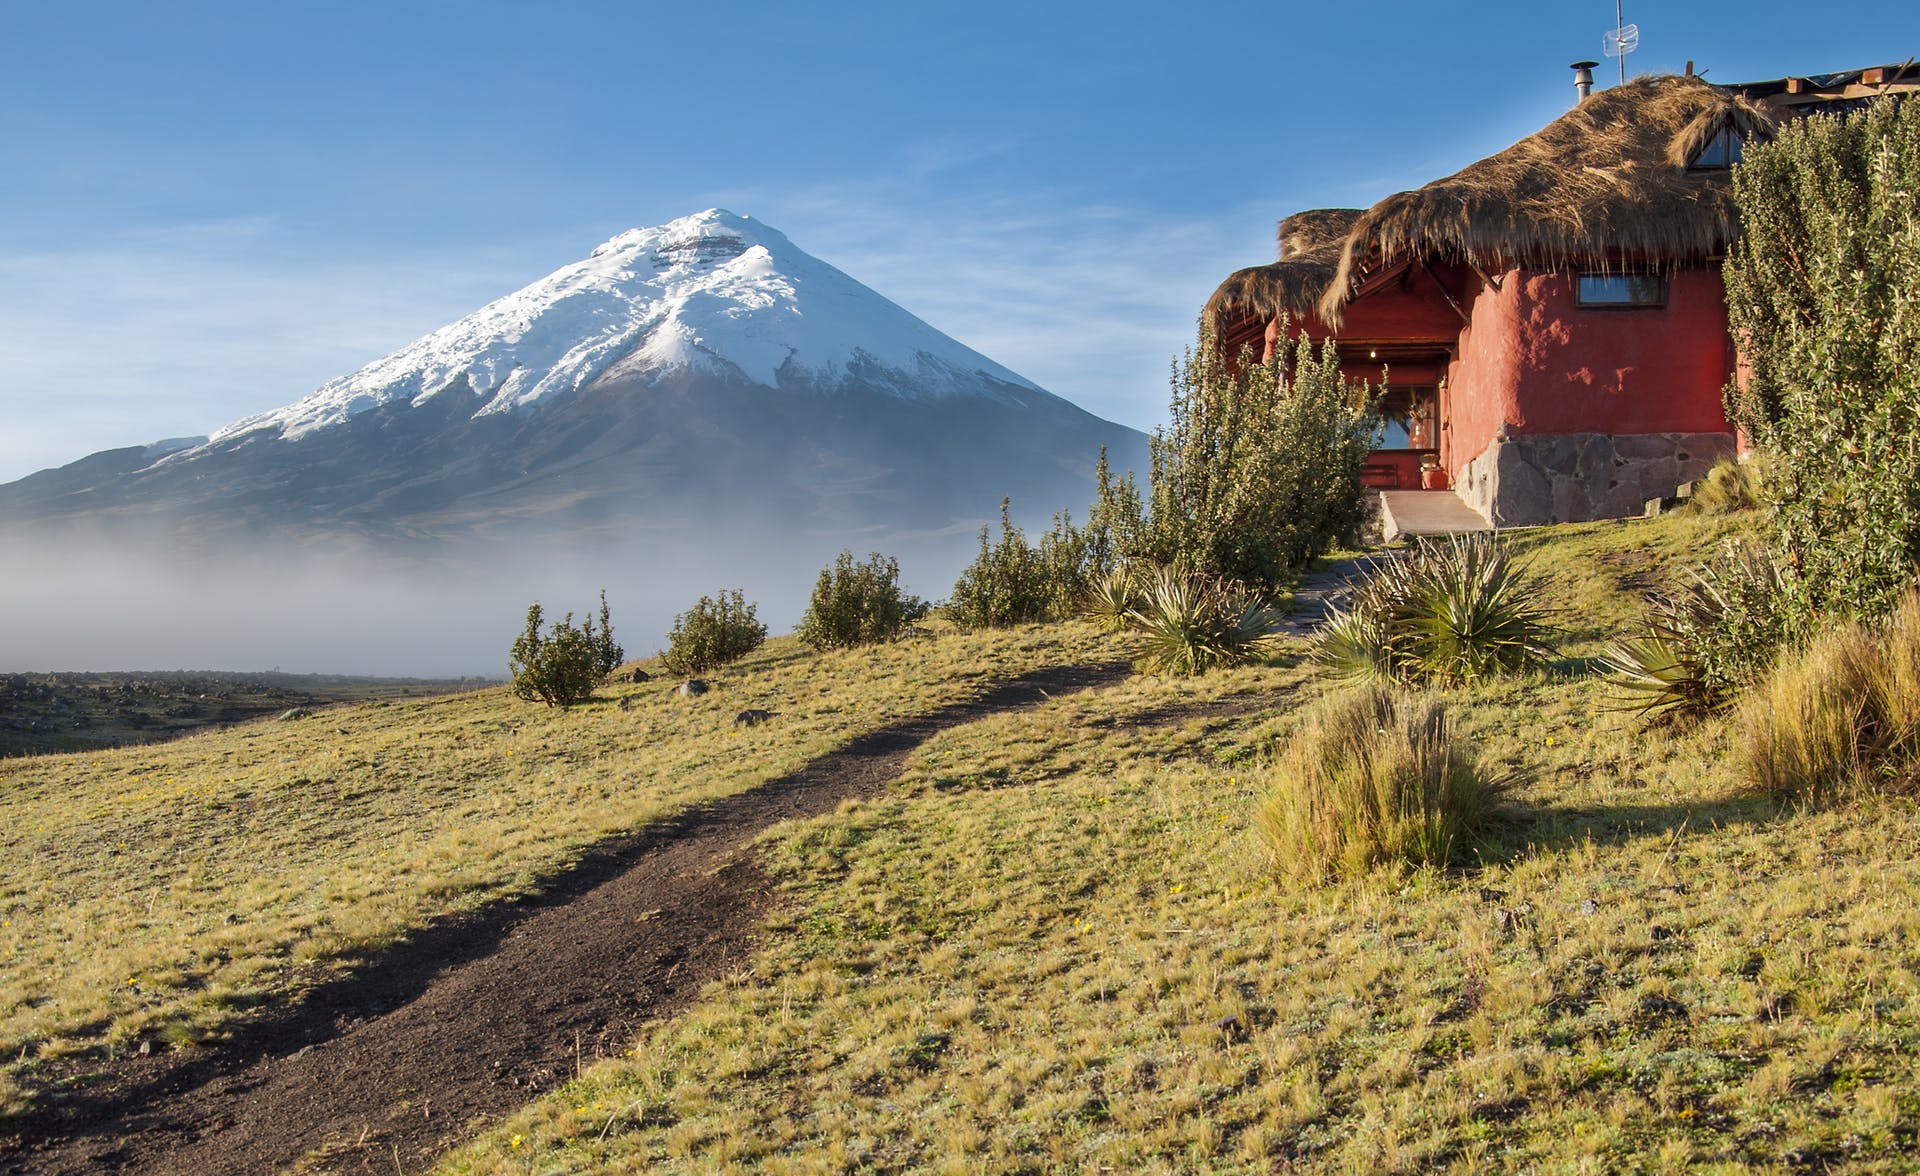 Cotopaxi, Ecuador’s most famous peak.